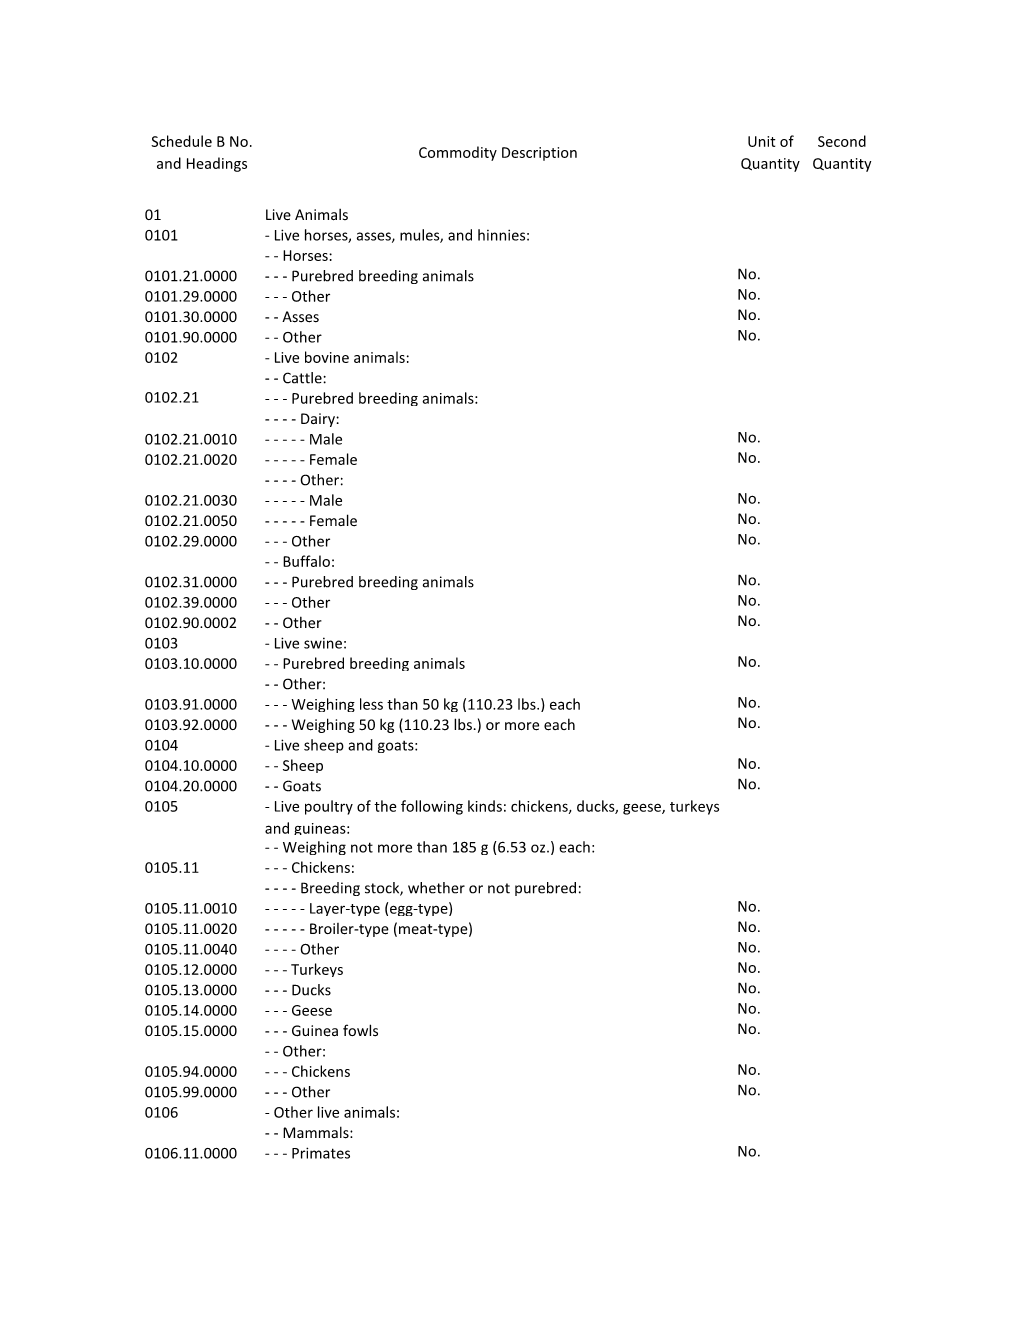 Schedule B No. and Headings Commodity Description Unit of Quantity Second Quantity 01 Live Animals 0101